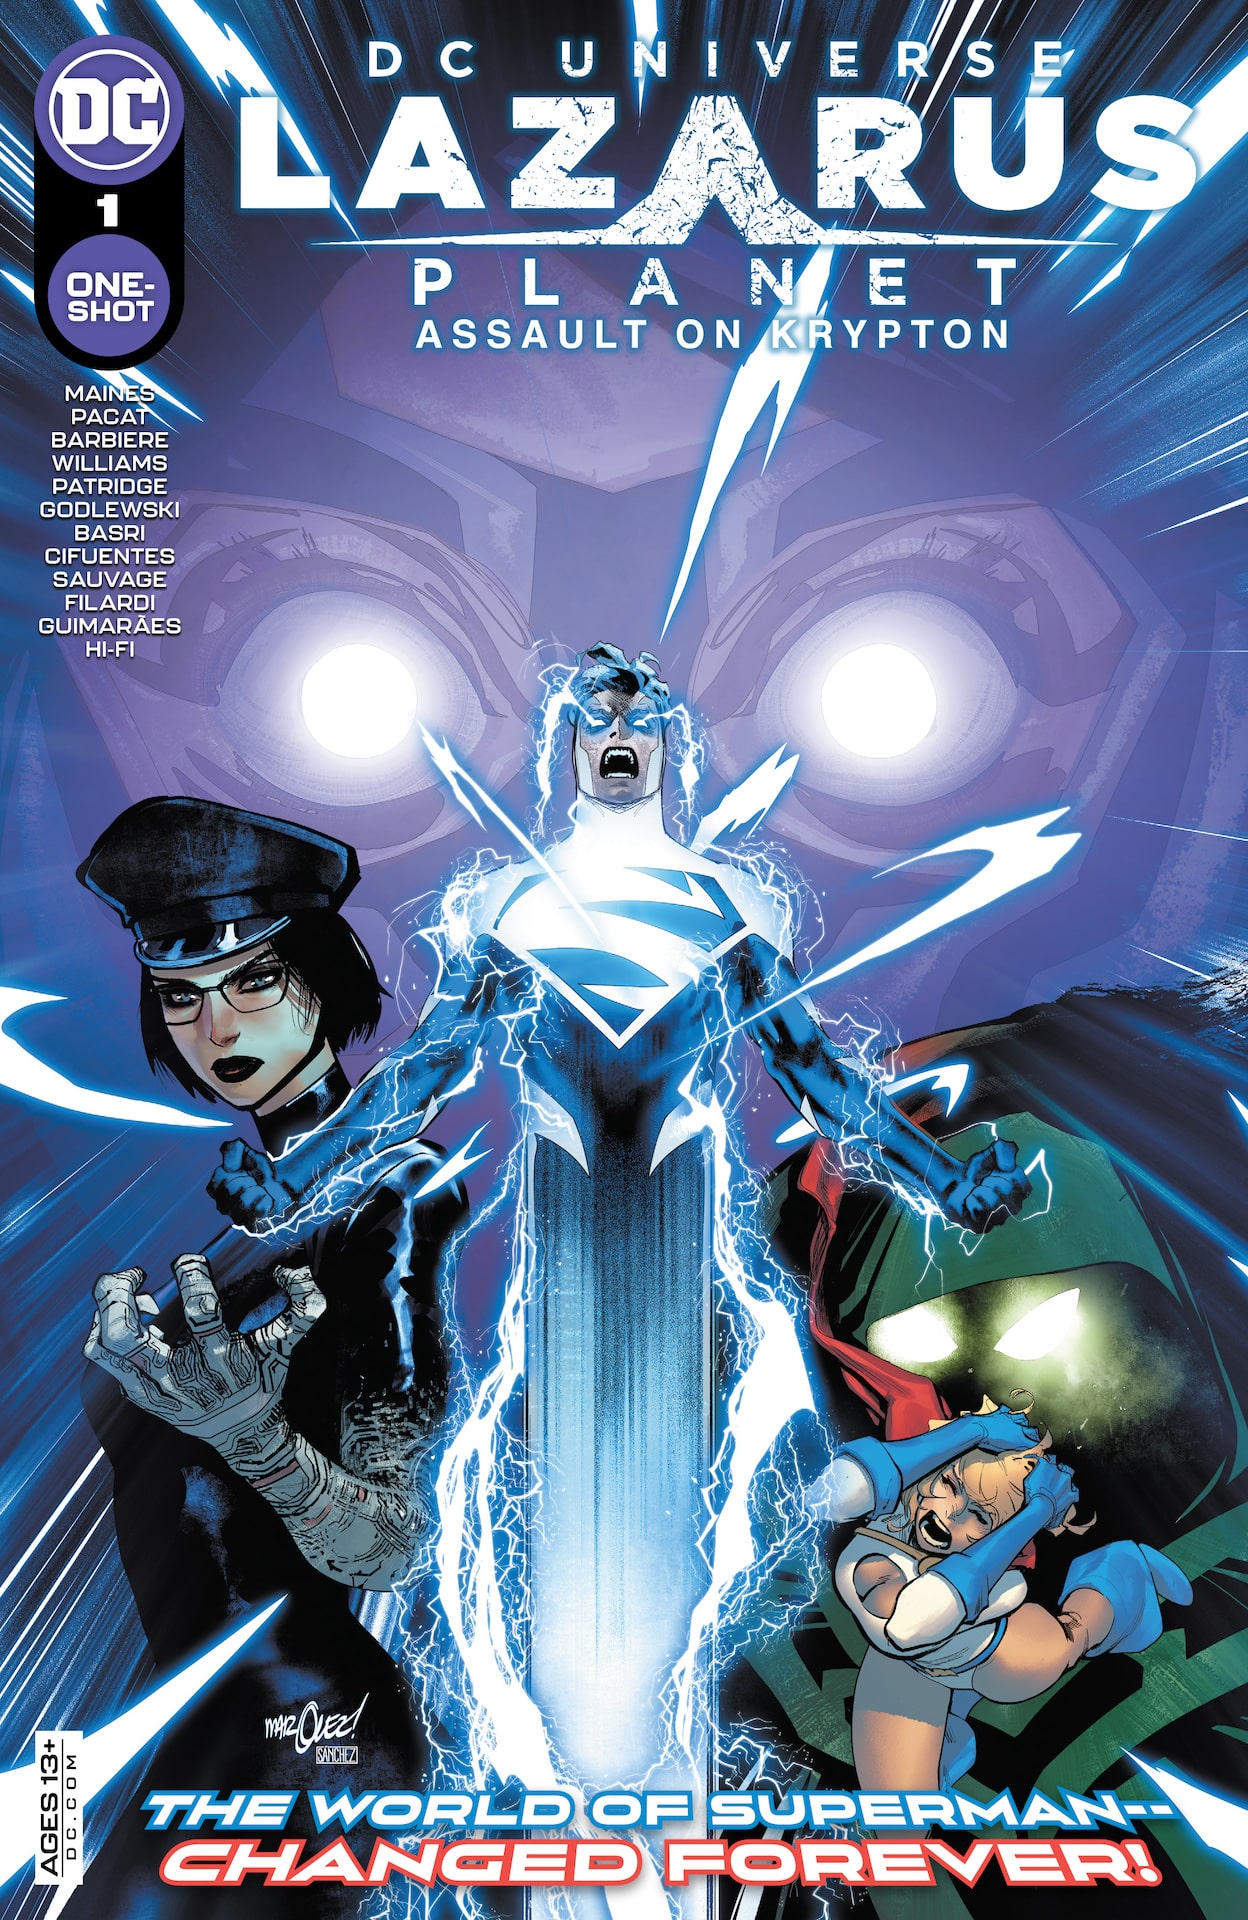 DC Preview: Lazarus Planet: Assault on Krypton #1